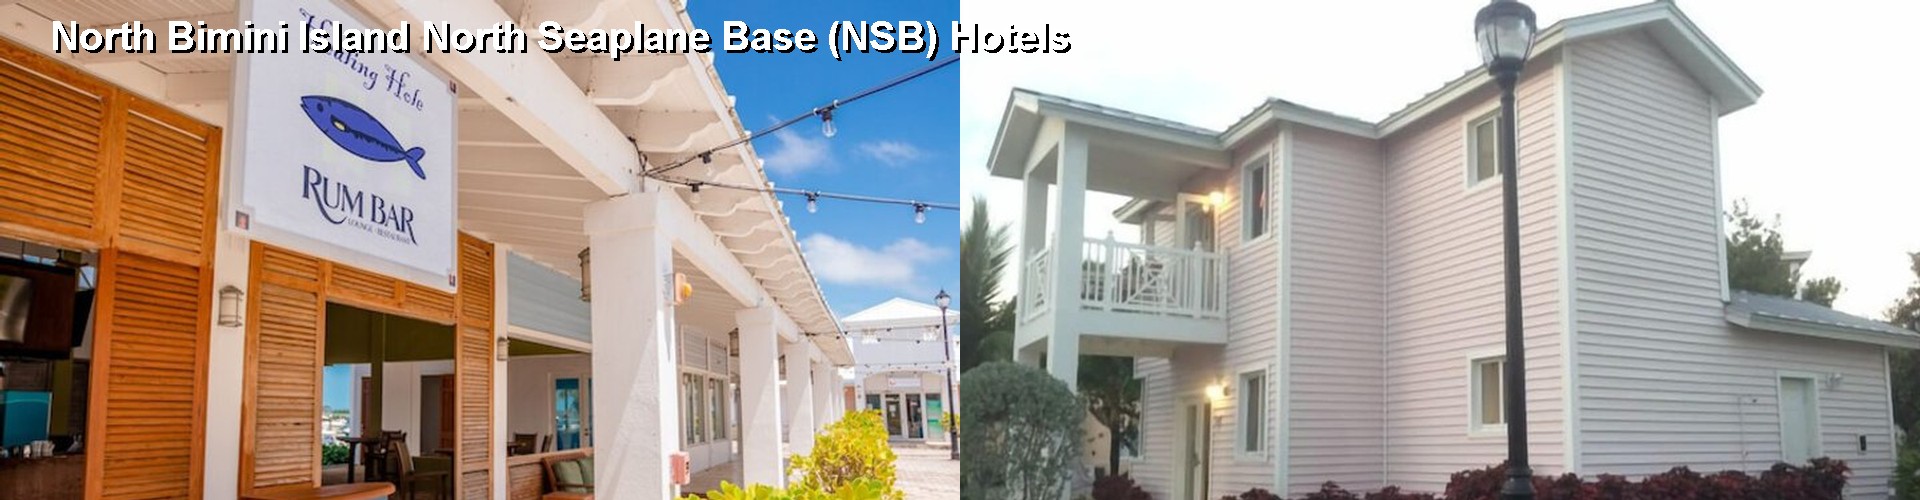 5 Best Hotels near North Bimini Island North Seaplane Base (NSB)